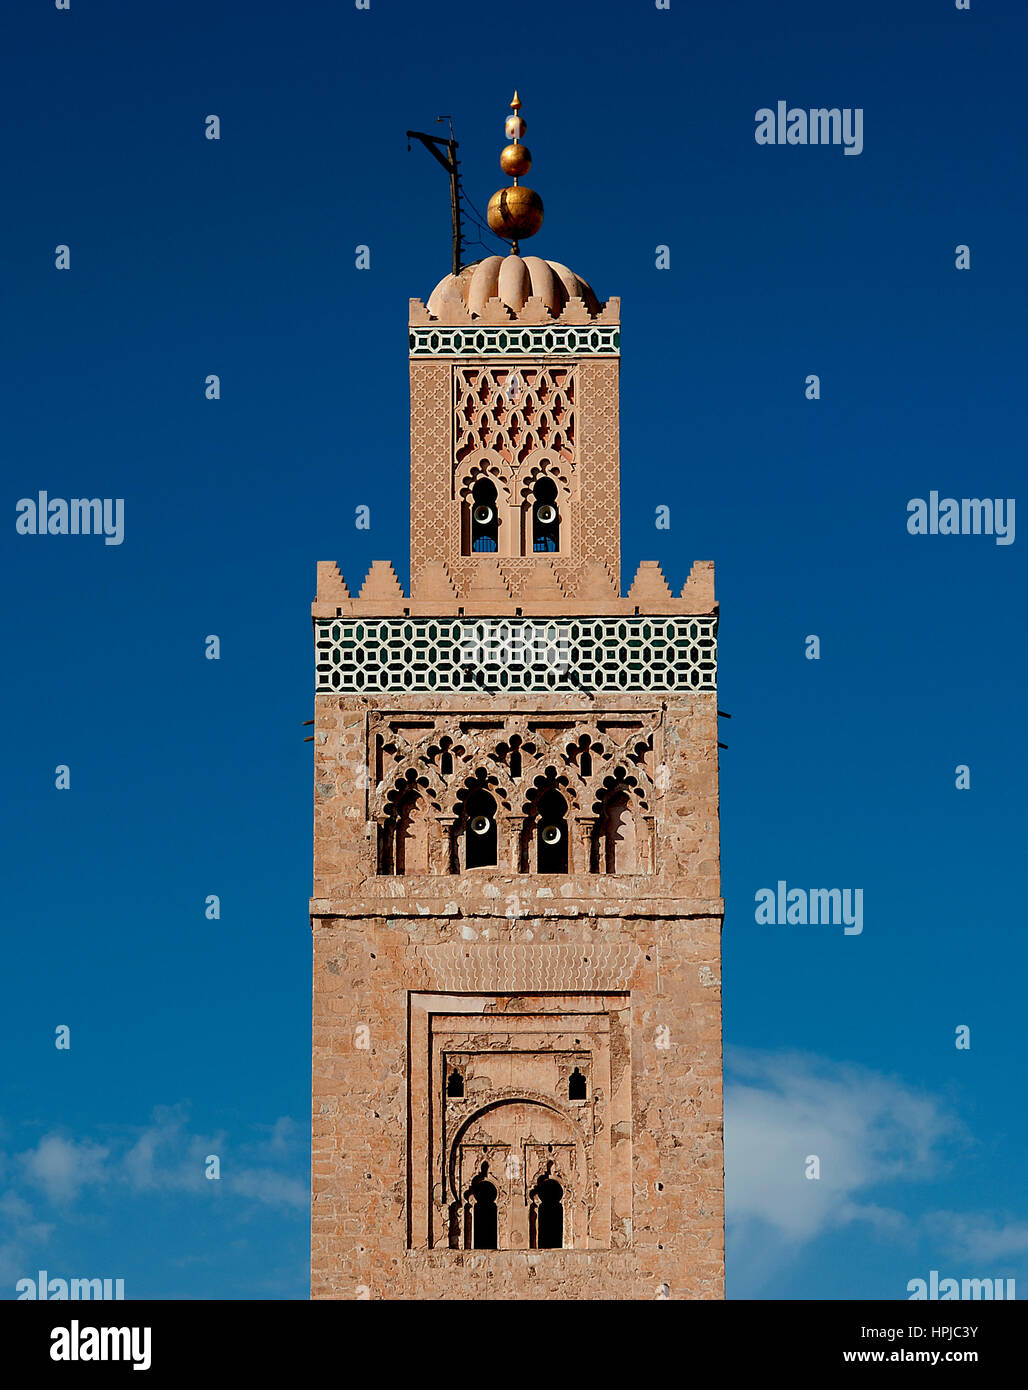 Koutoubia Minaret, Marrakesh, Morocco. The Koutoubia minaret, part of Marrakesh's largest mosque, rises 77 metres high above the city's famous medina. Stock Photo